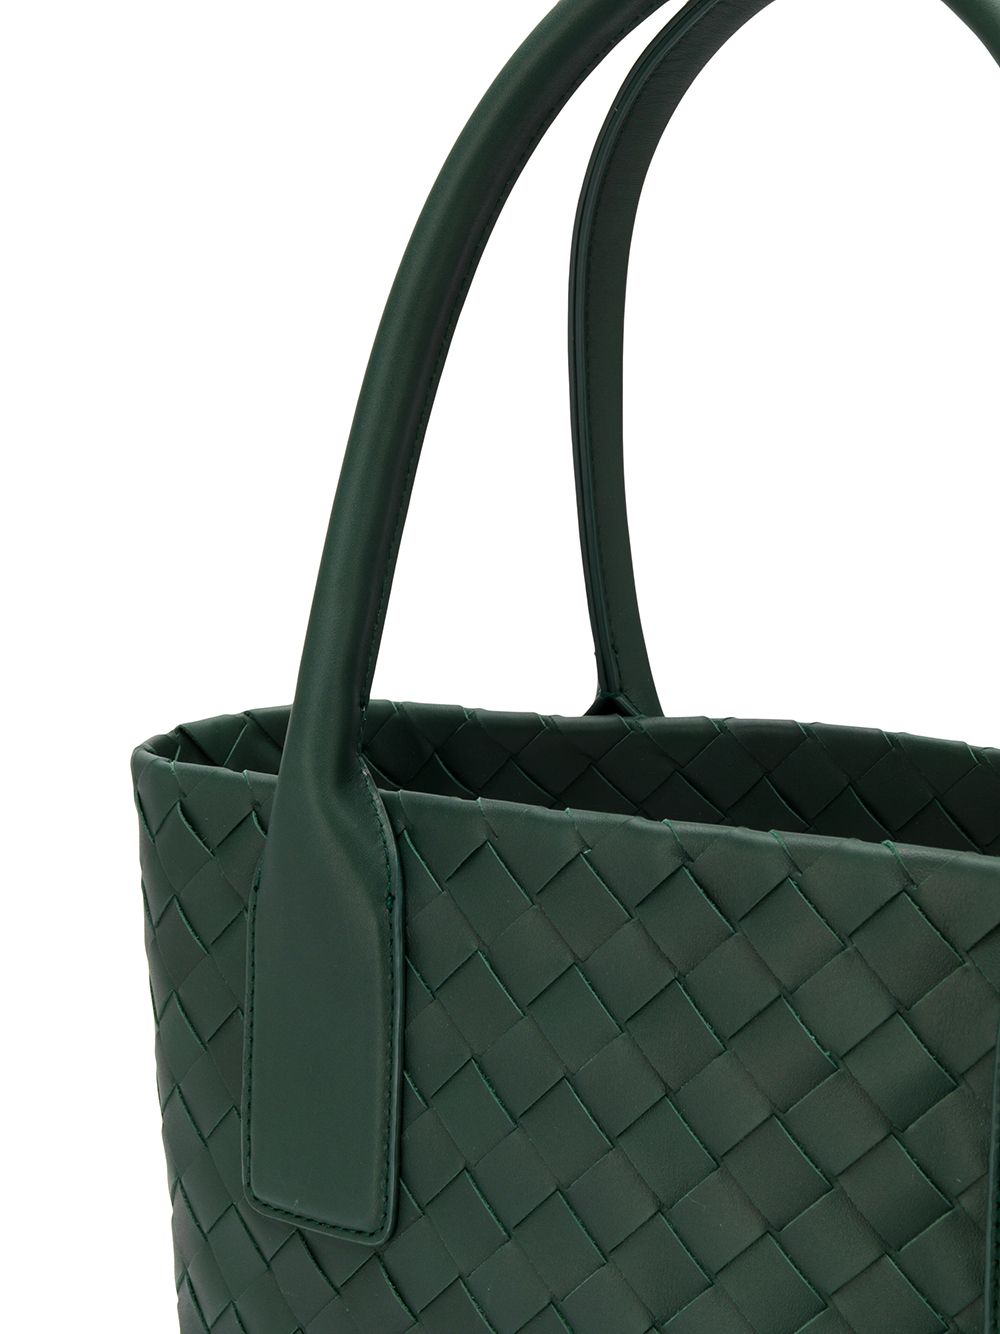 фото Bottega veneta сумка-тоут с плетением intrecciato